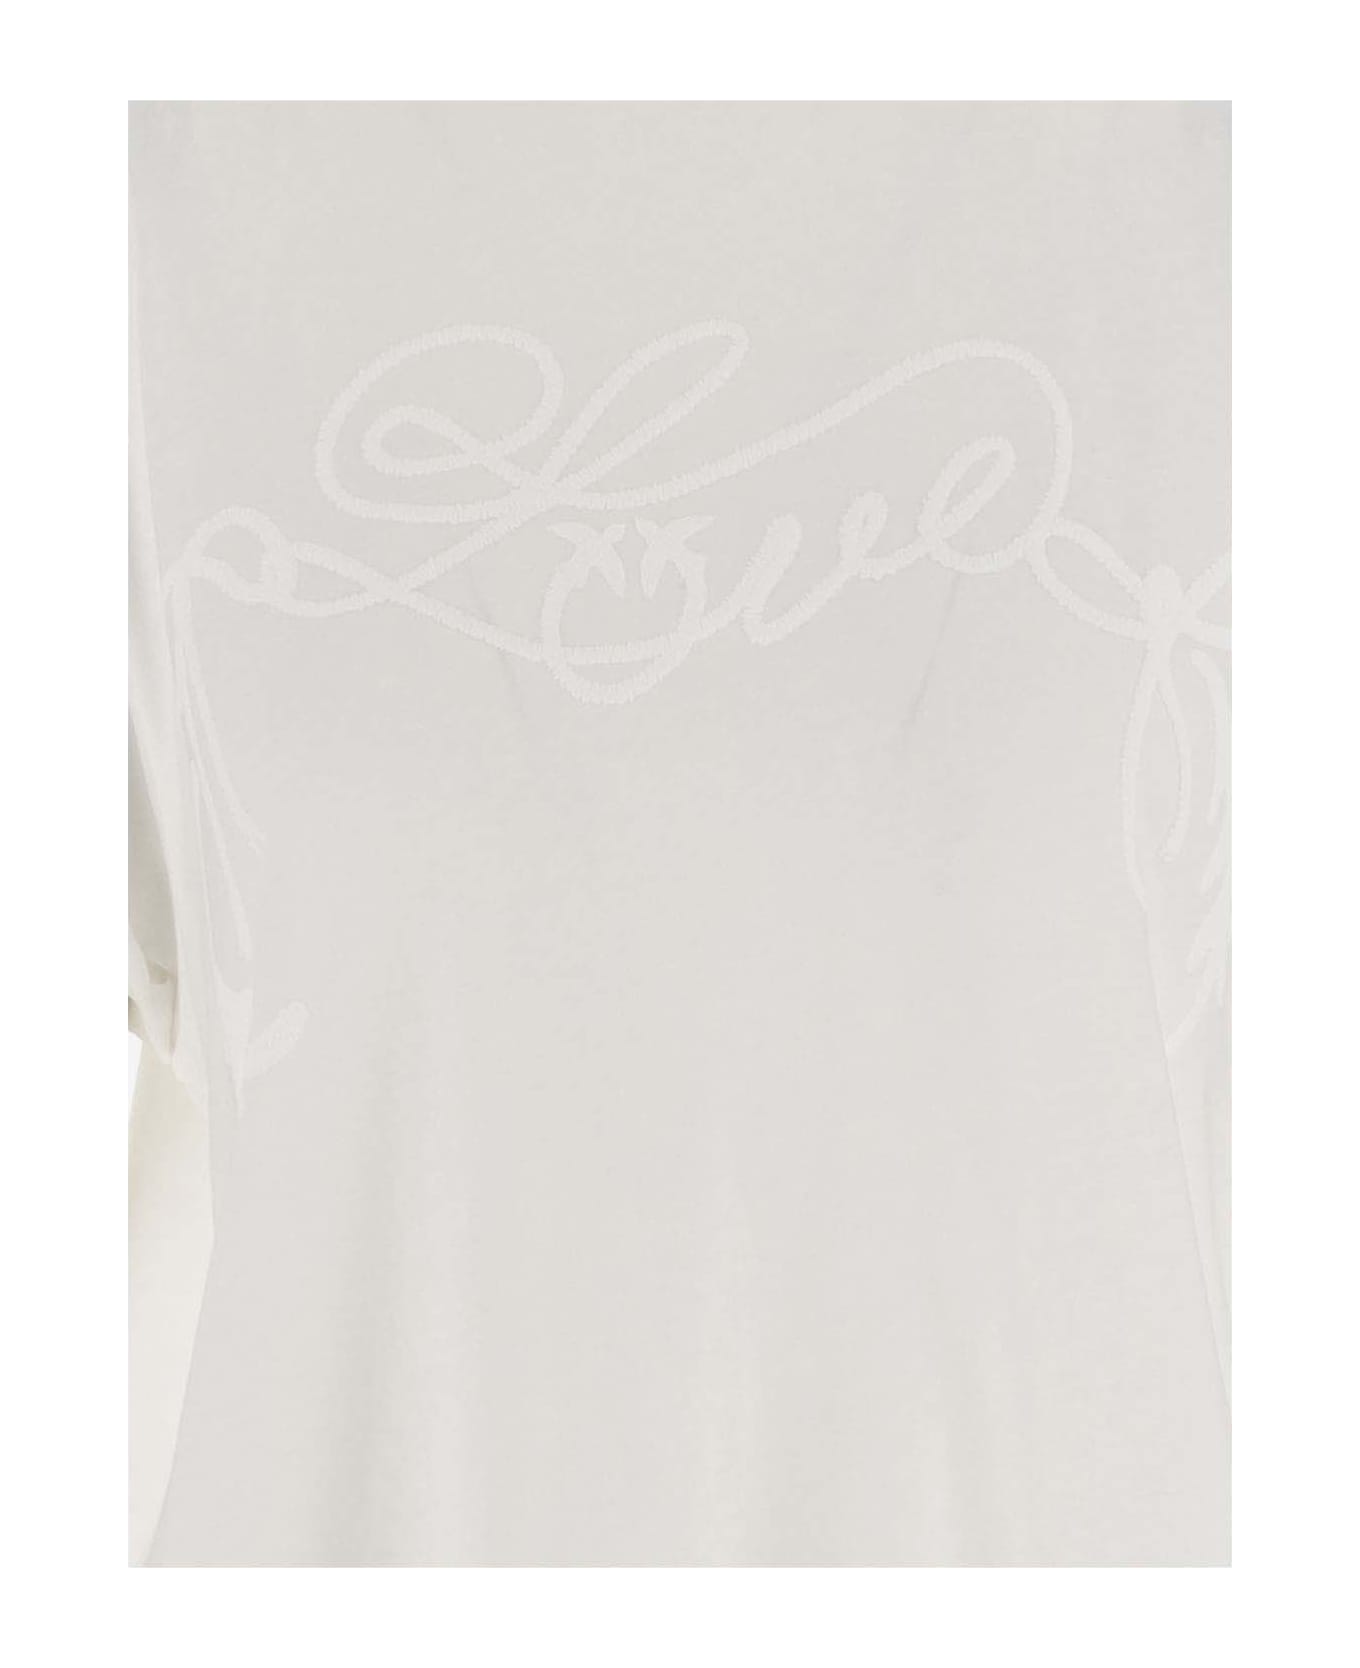 Pinko Love Print Cotton T-shirt - White